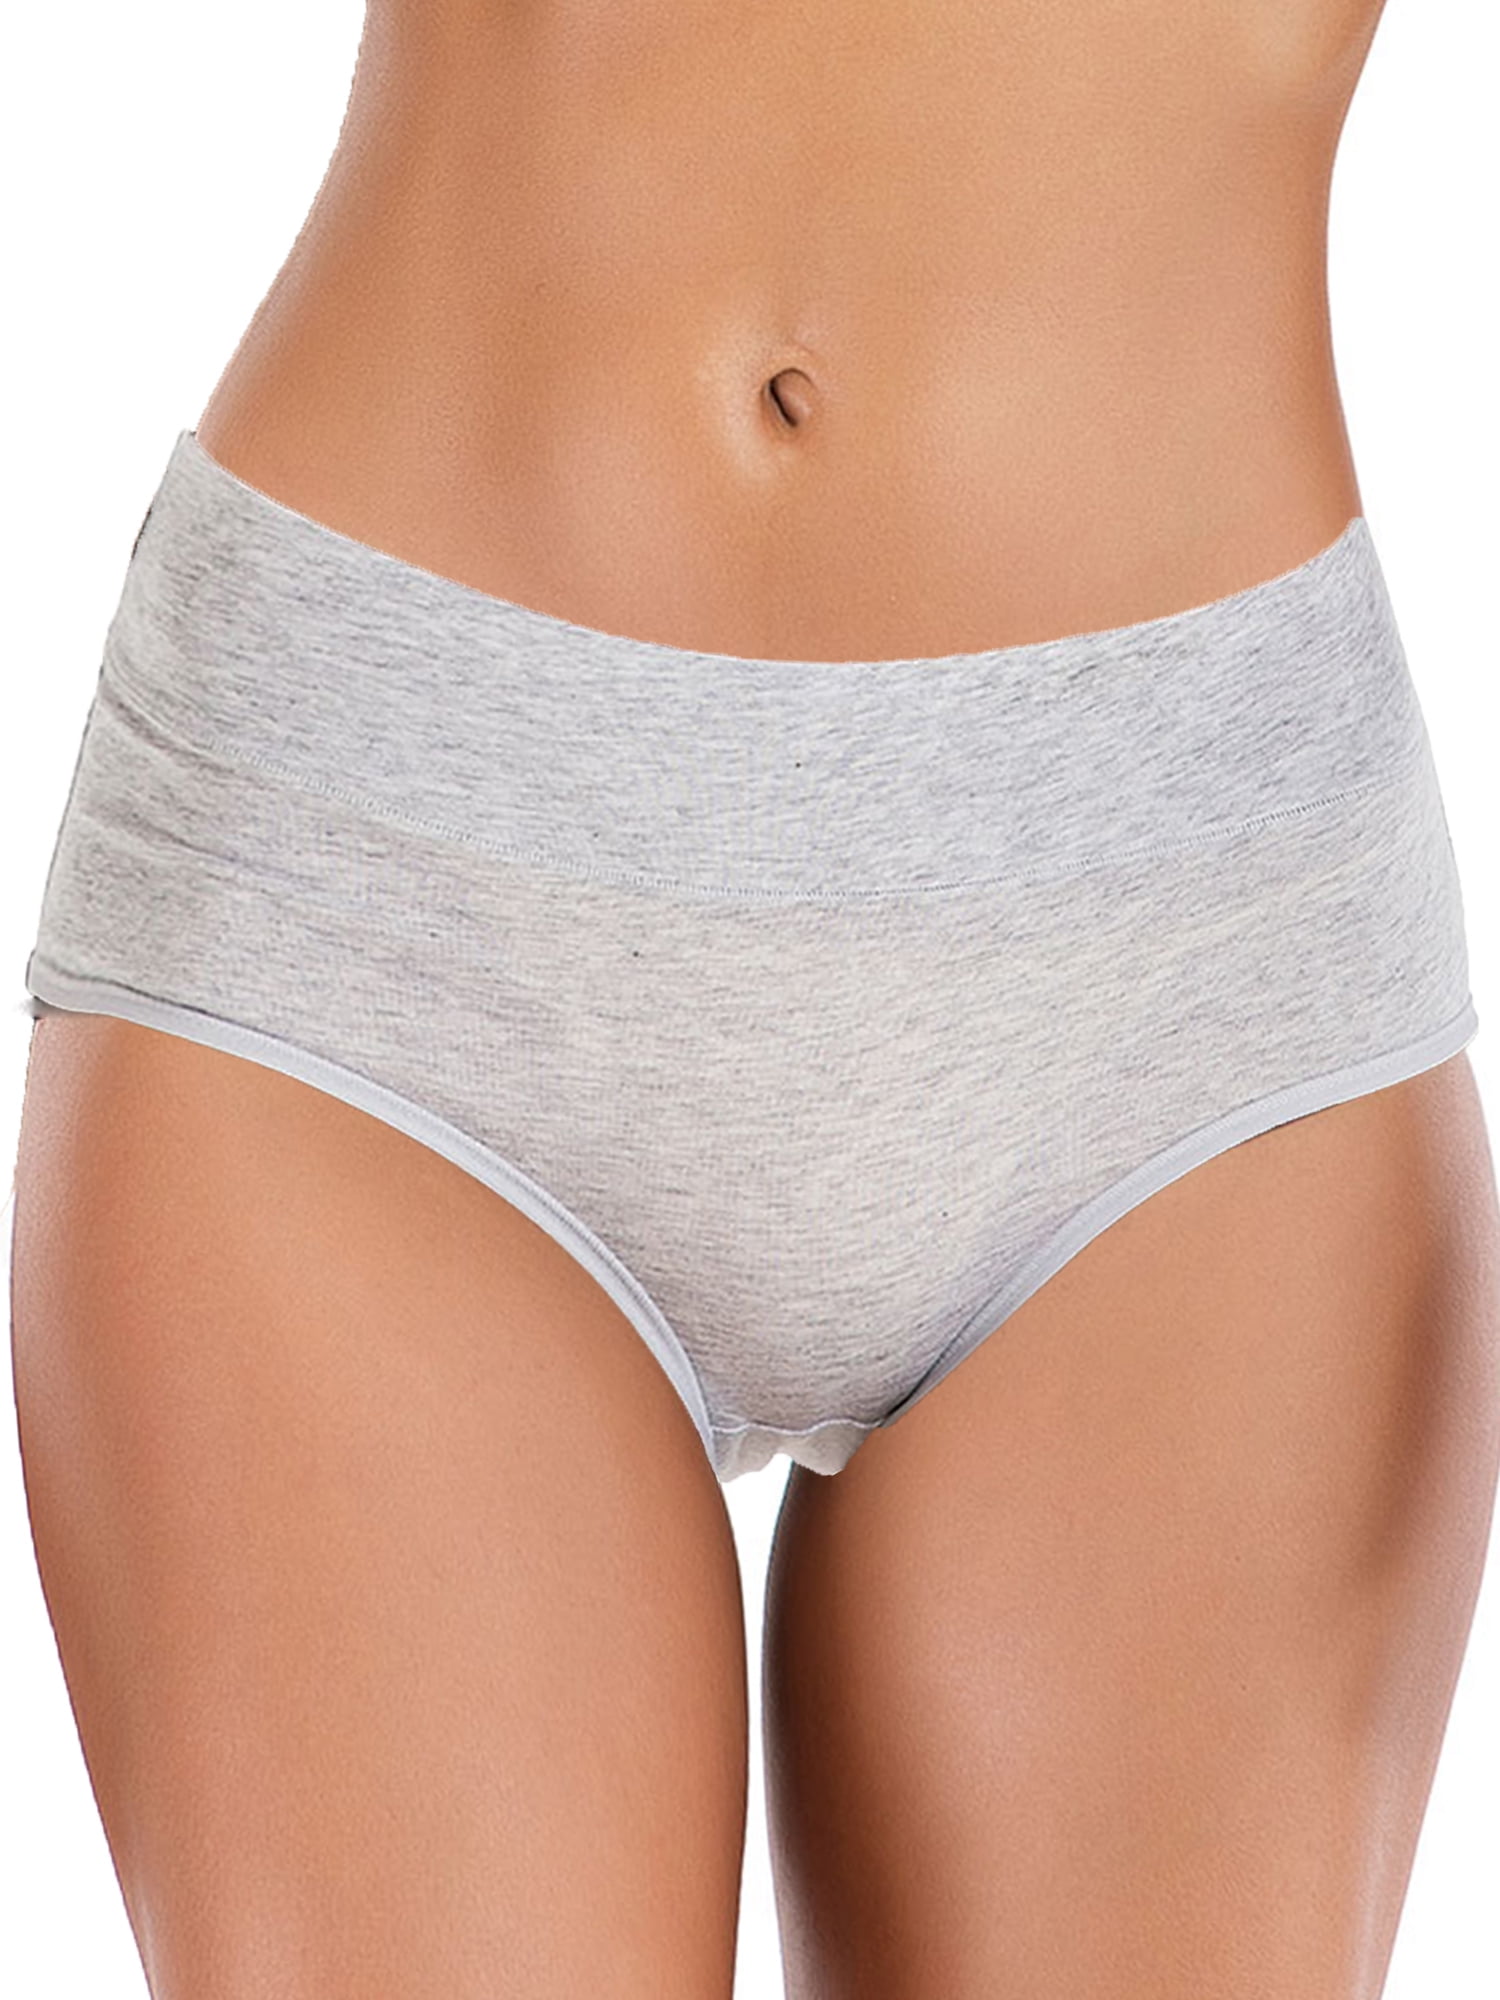 No Muffin Top Full Coverage Cotton Underwear Briefs Soft Stretch Breathable Ladies Panties for Women Womens Underwear